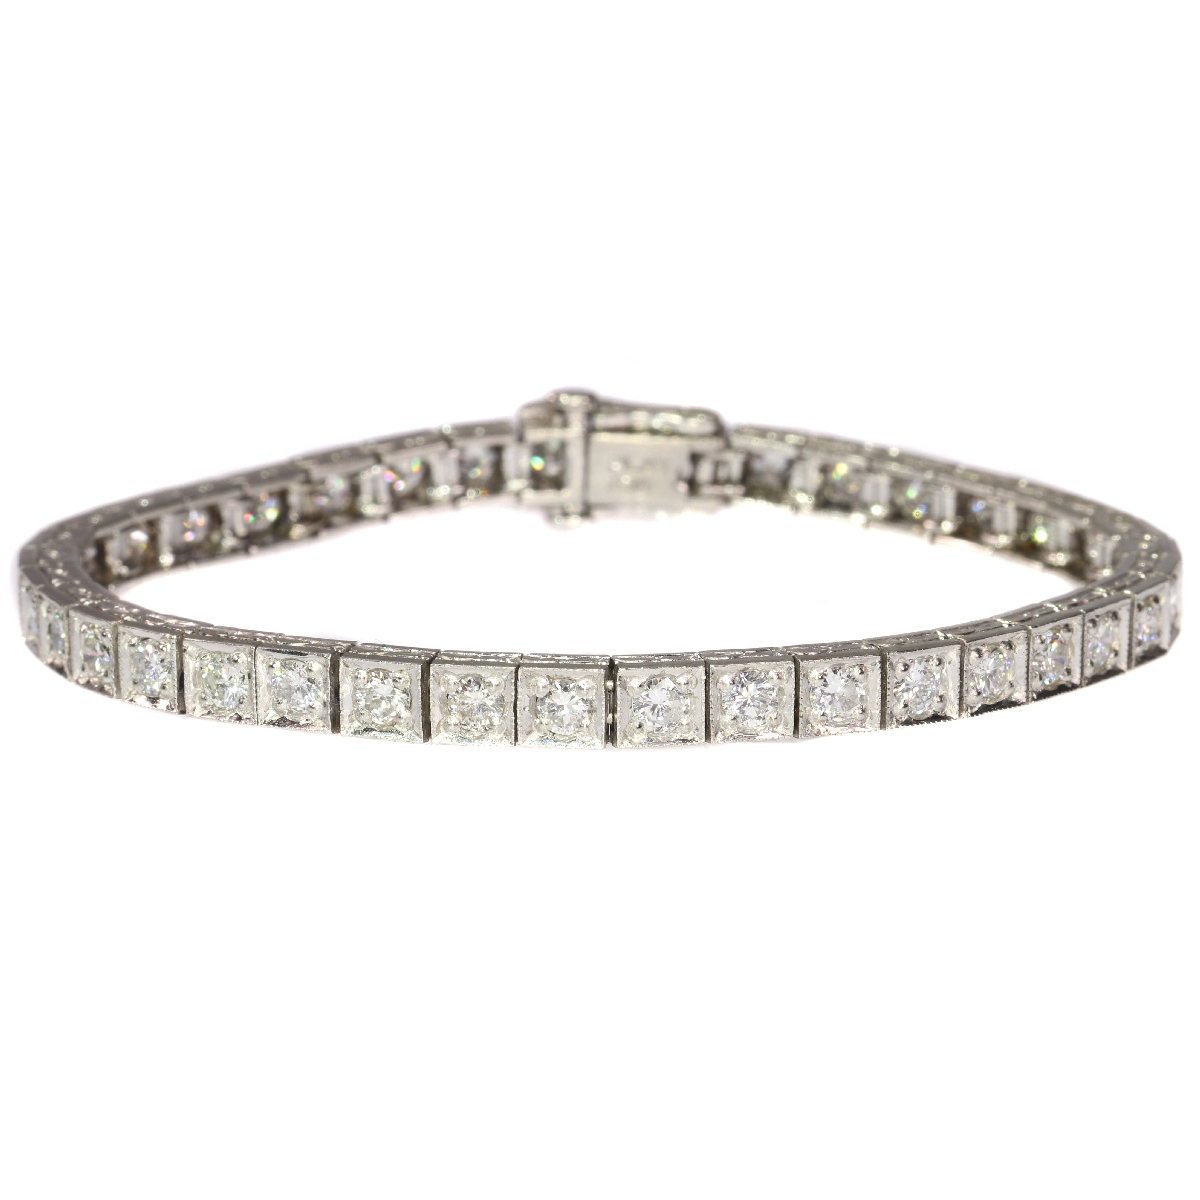 Estate platinum Art Deco diamond tennis bracelet from the fifties